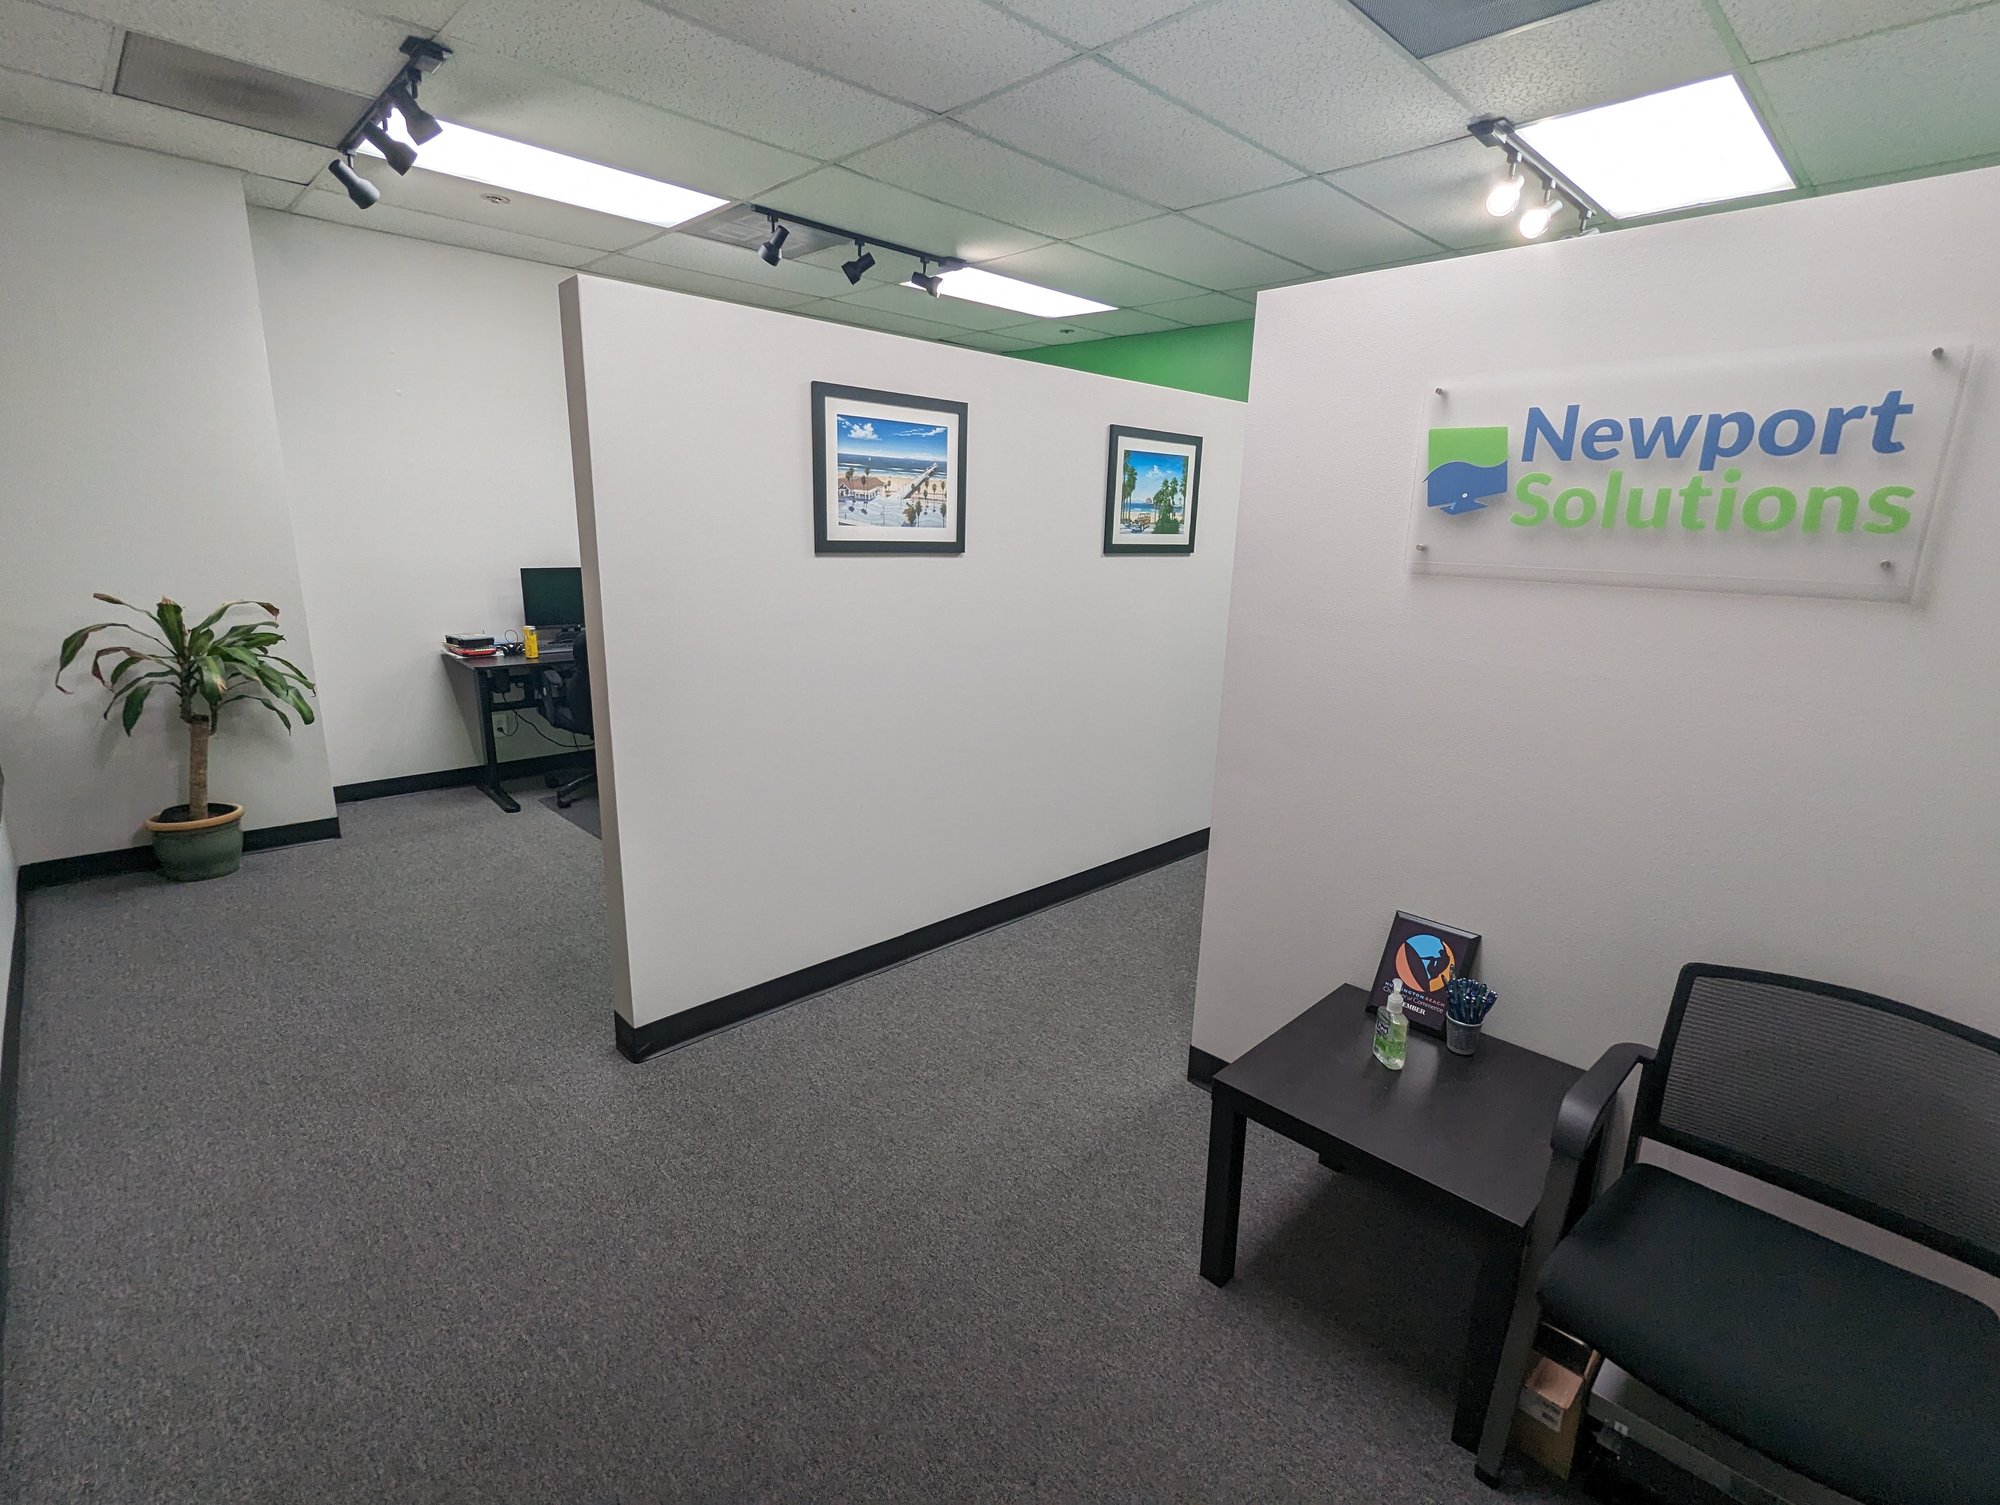 Newport Solutions office interior 2